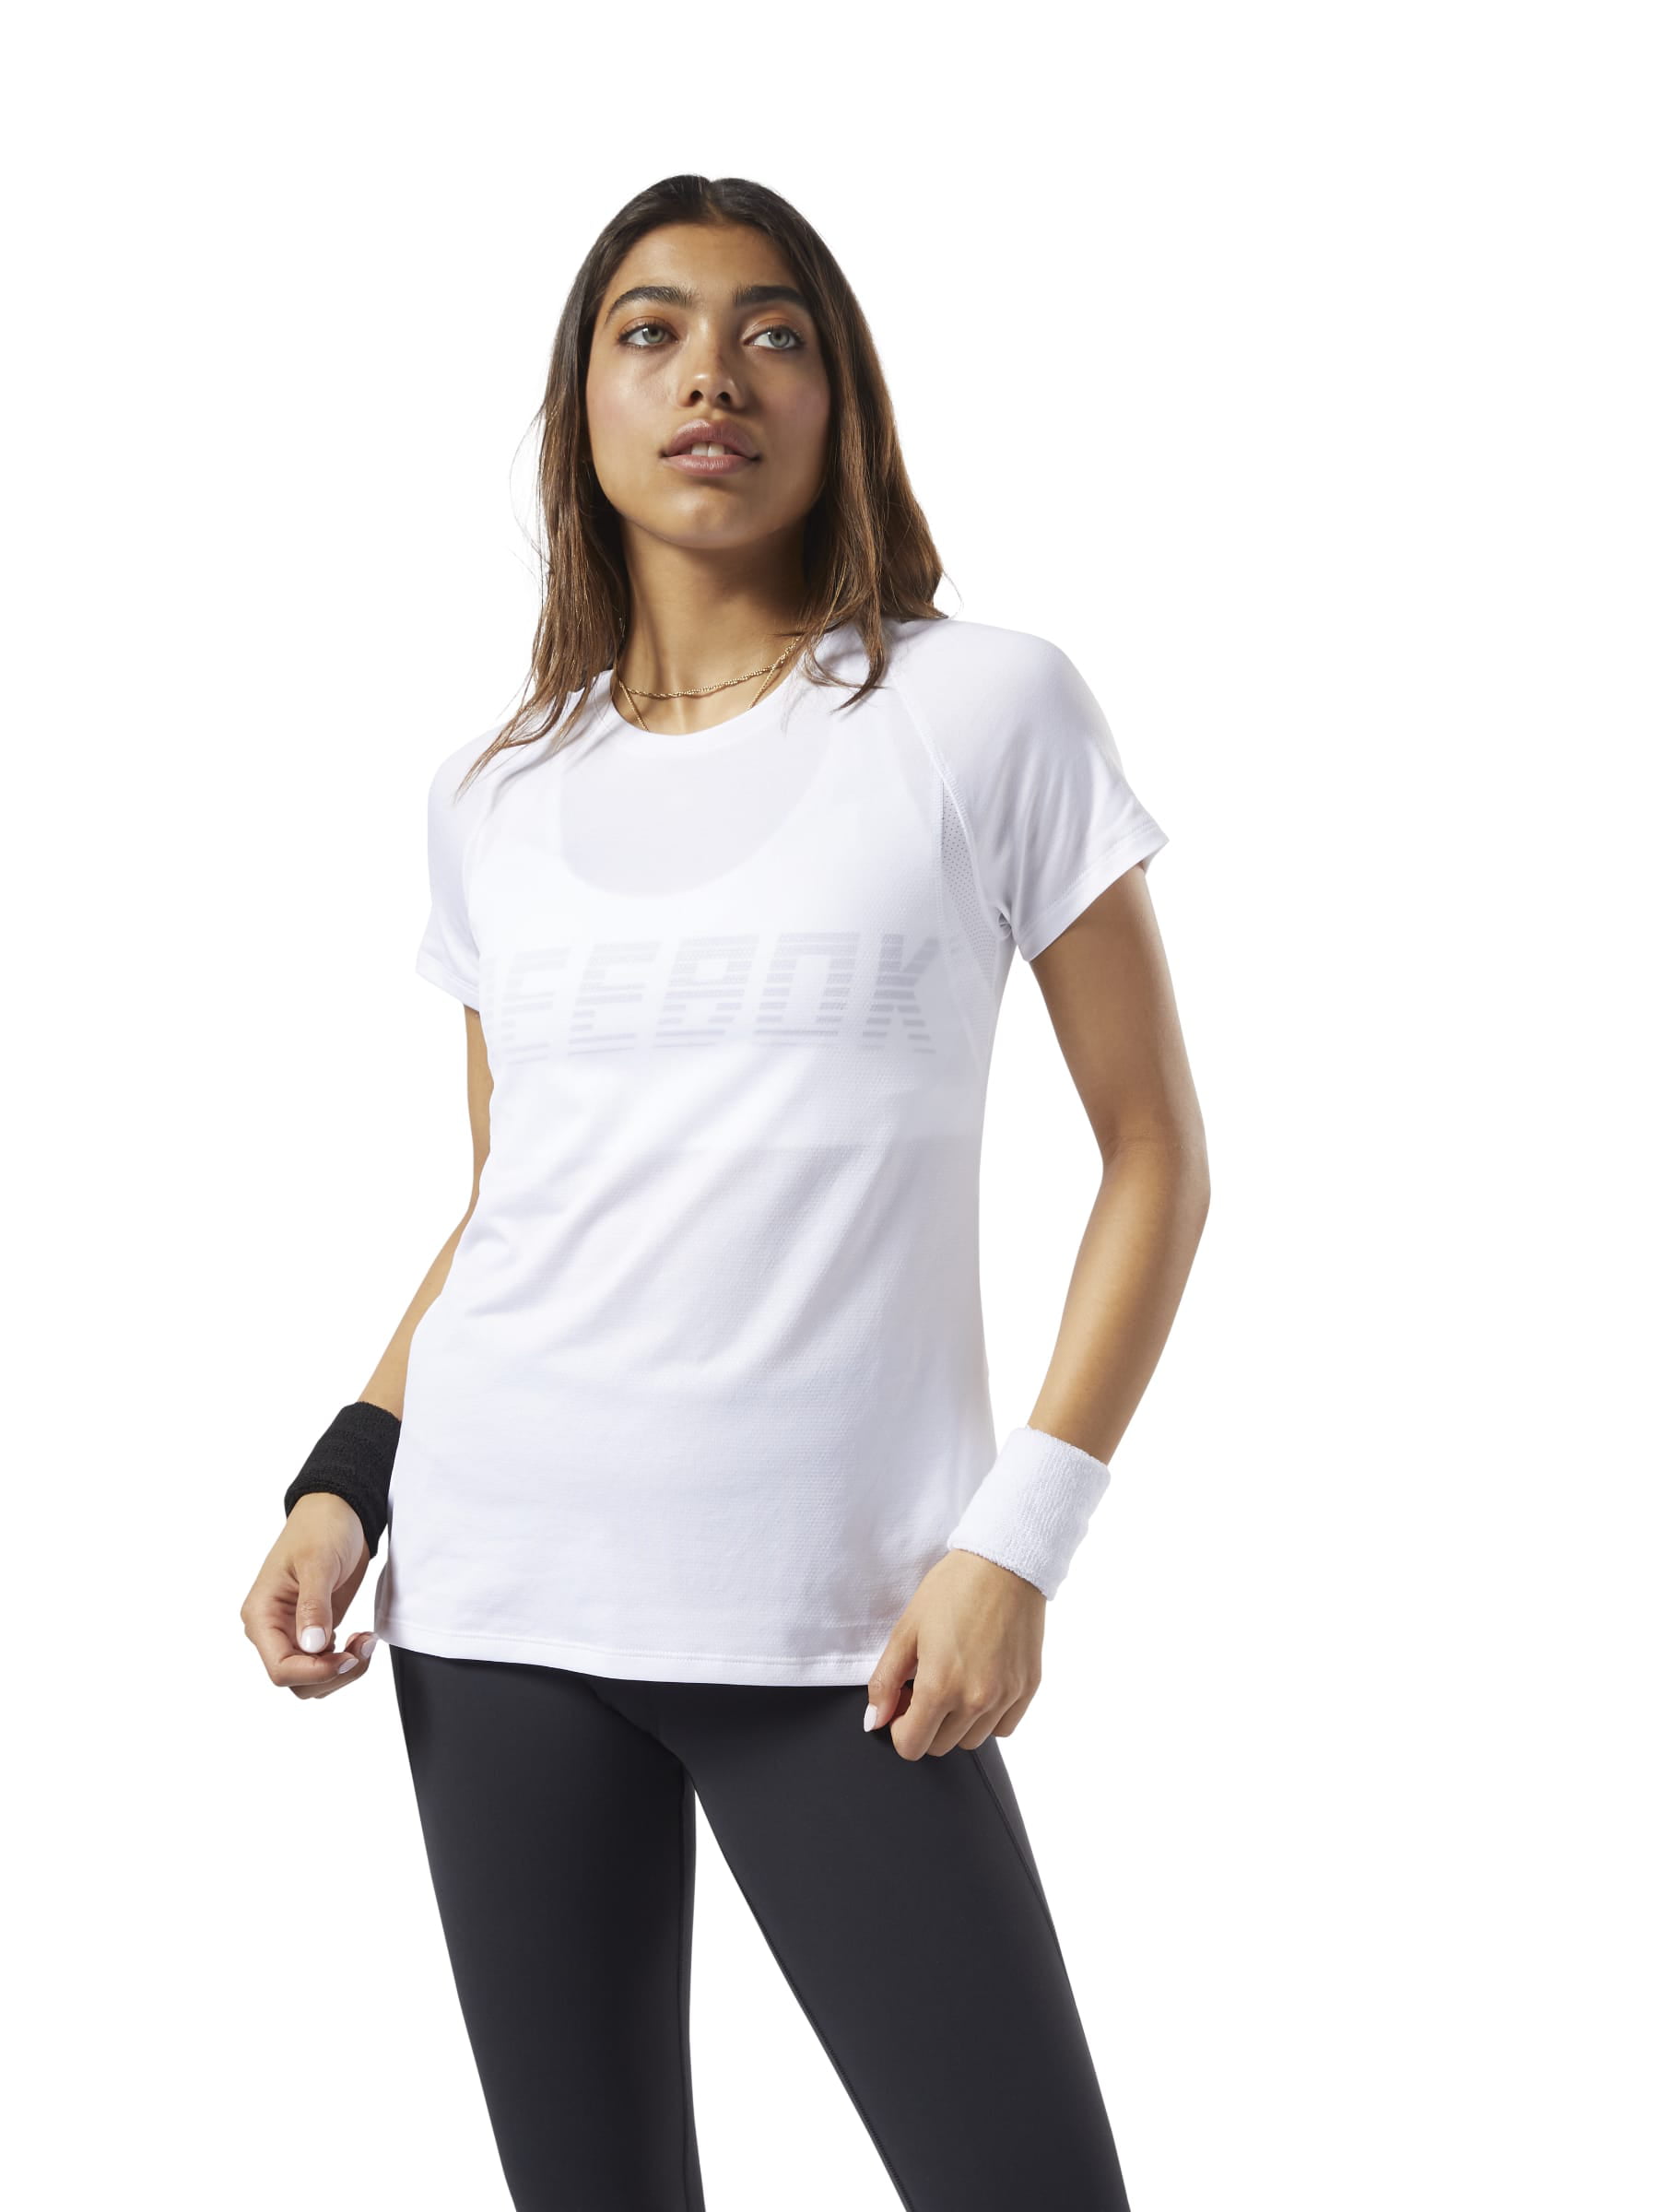 Reebok Smartvent Move Mens Training Top White Short Sleeve Gym Workout T-Shirt 